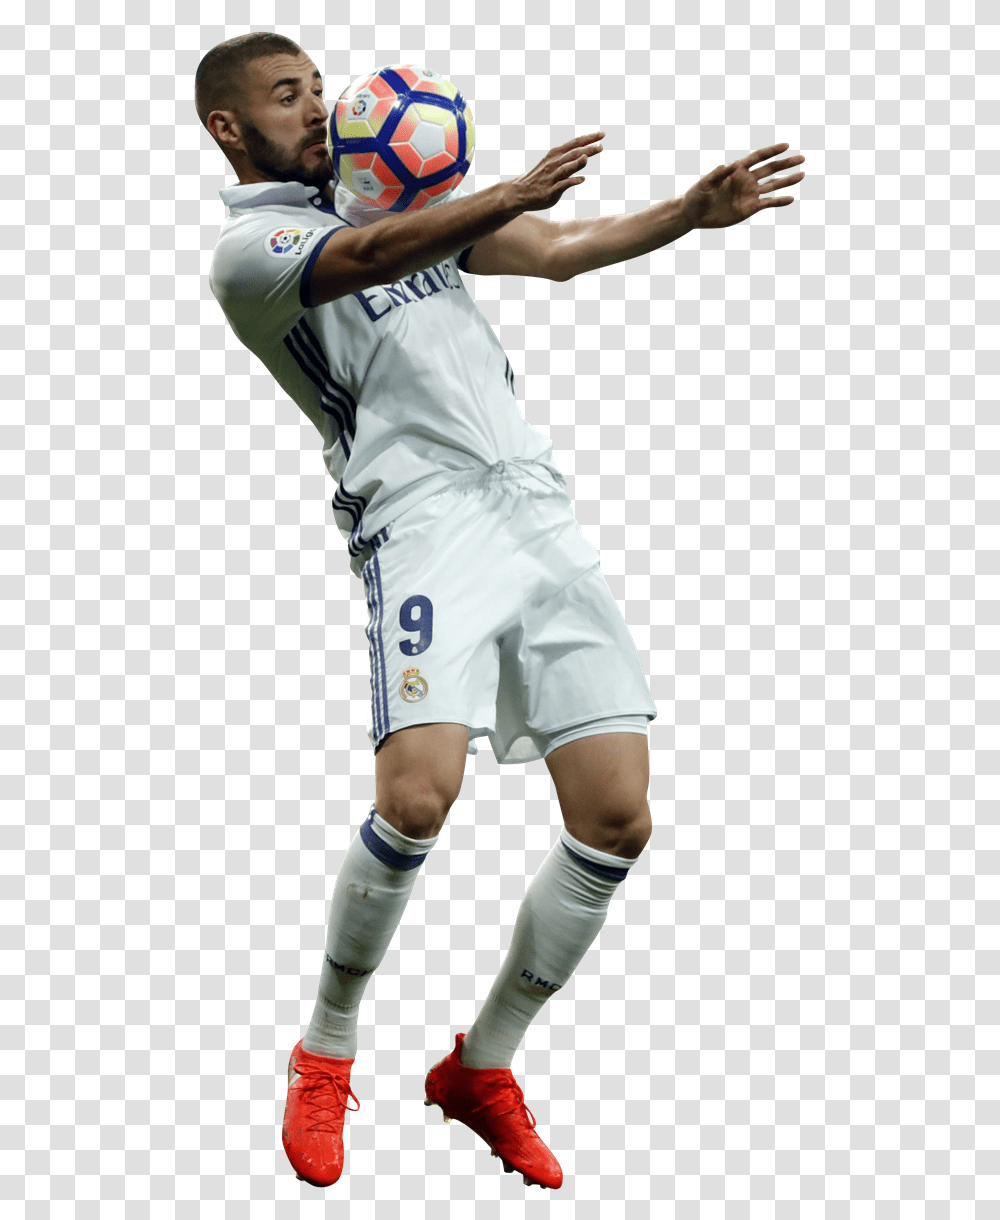 Karim Benzemarender Soccer Player, Person, People, Soccer Ball, Football Transparent Png